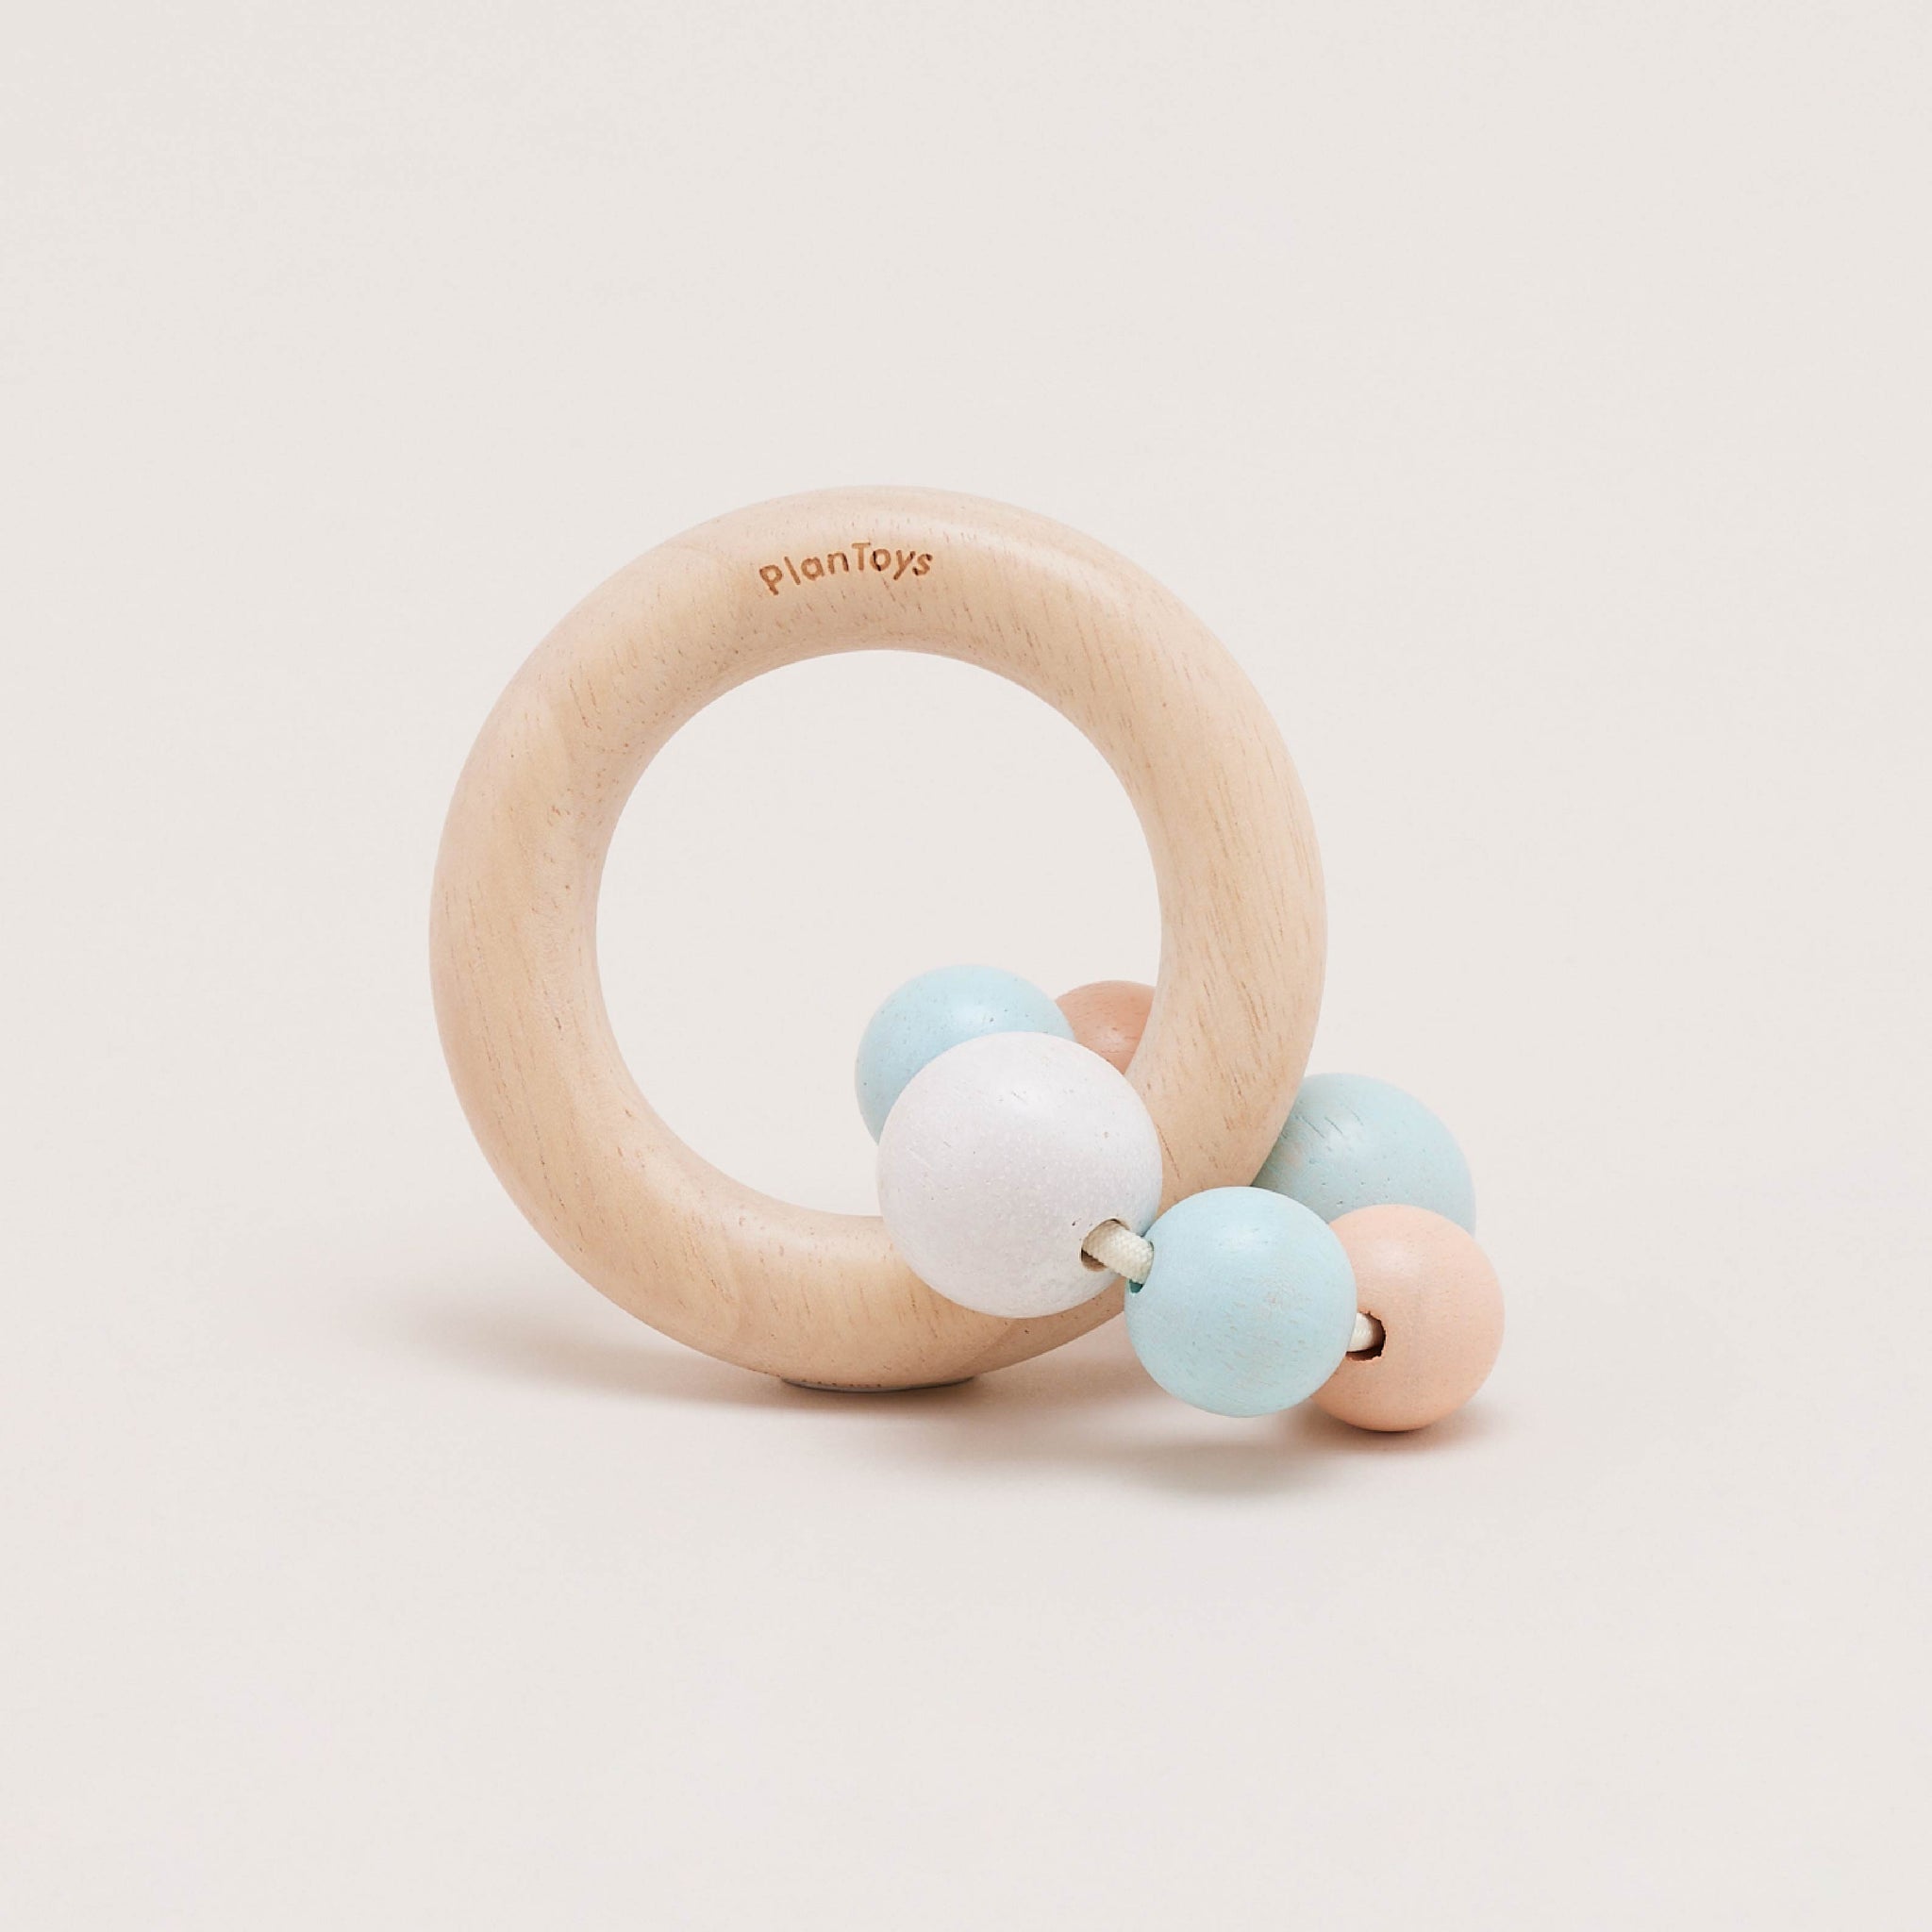 Plantoys Beads Rattle | ของเล่นไม้ วงแหวนลูกปัด